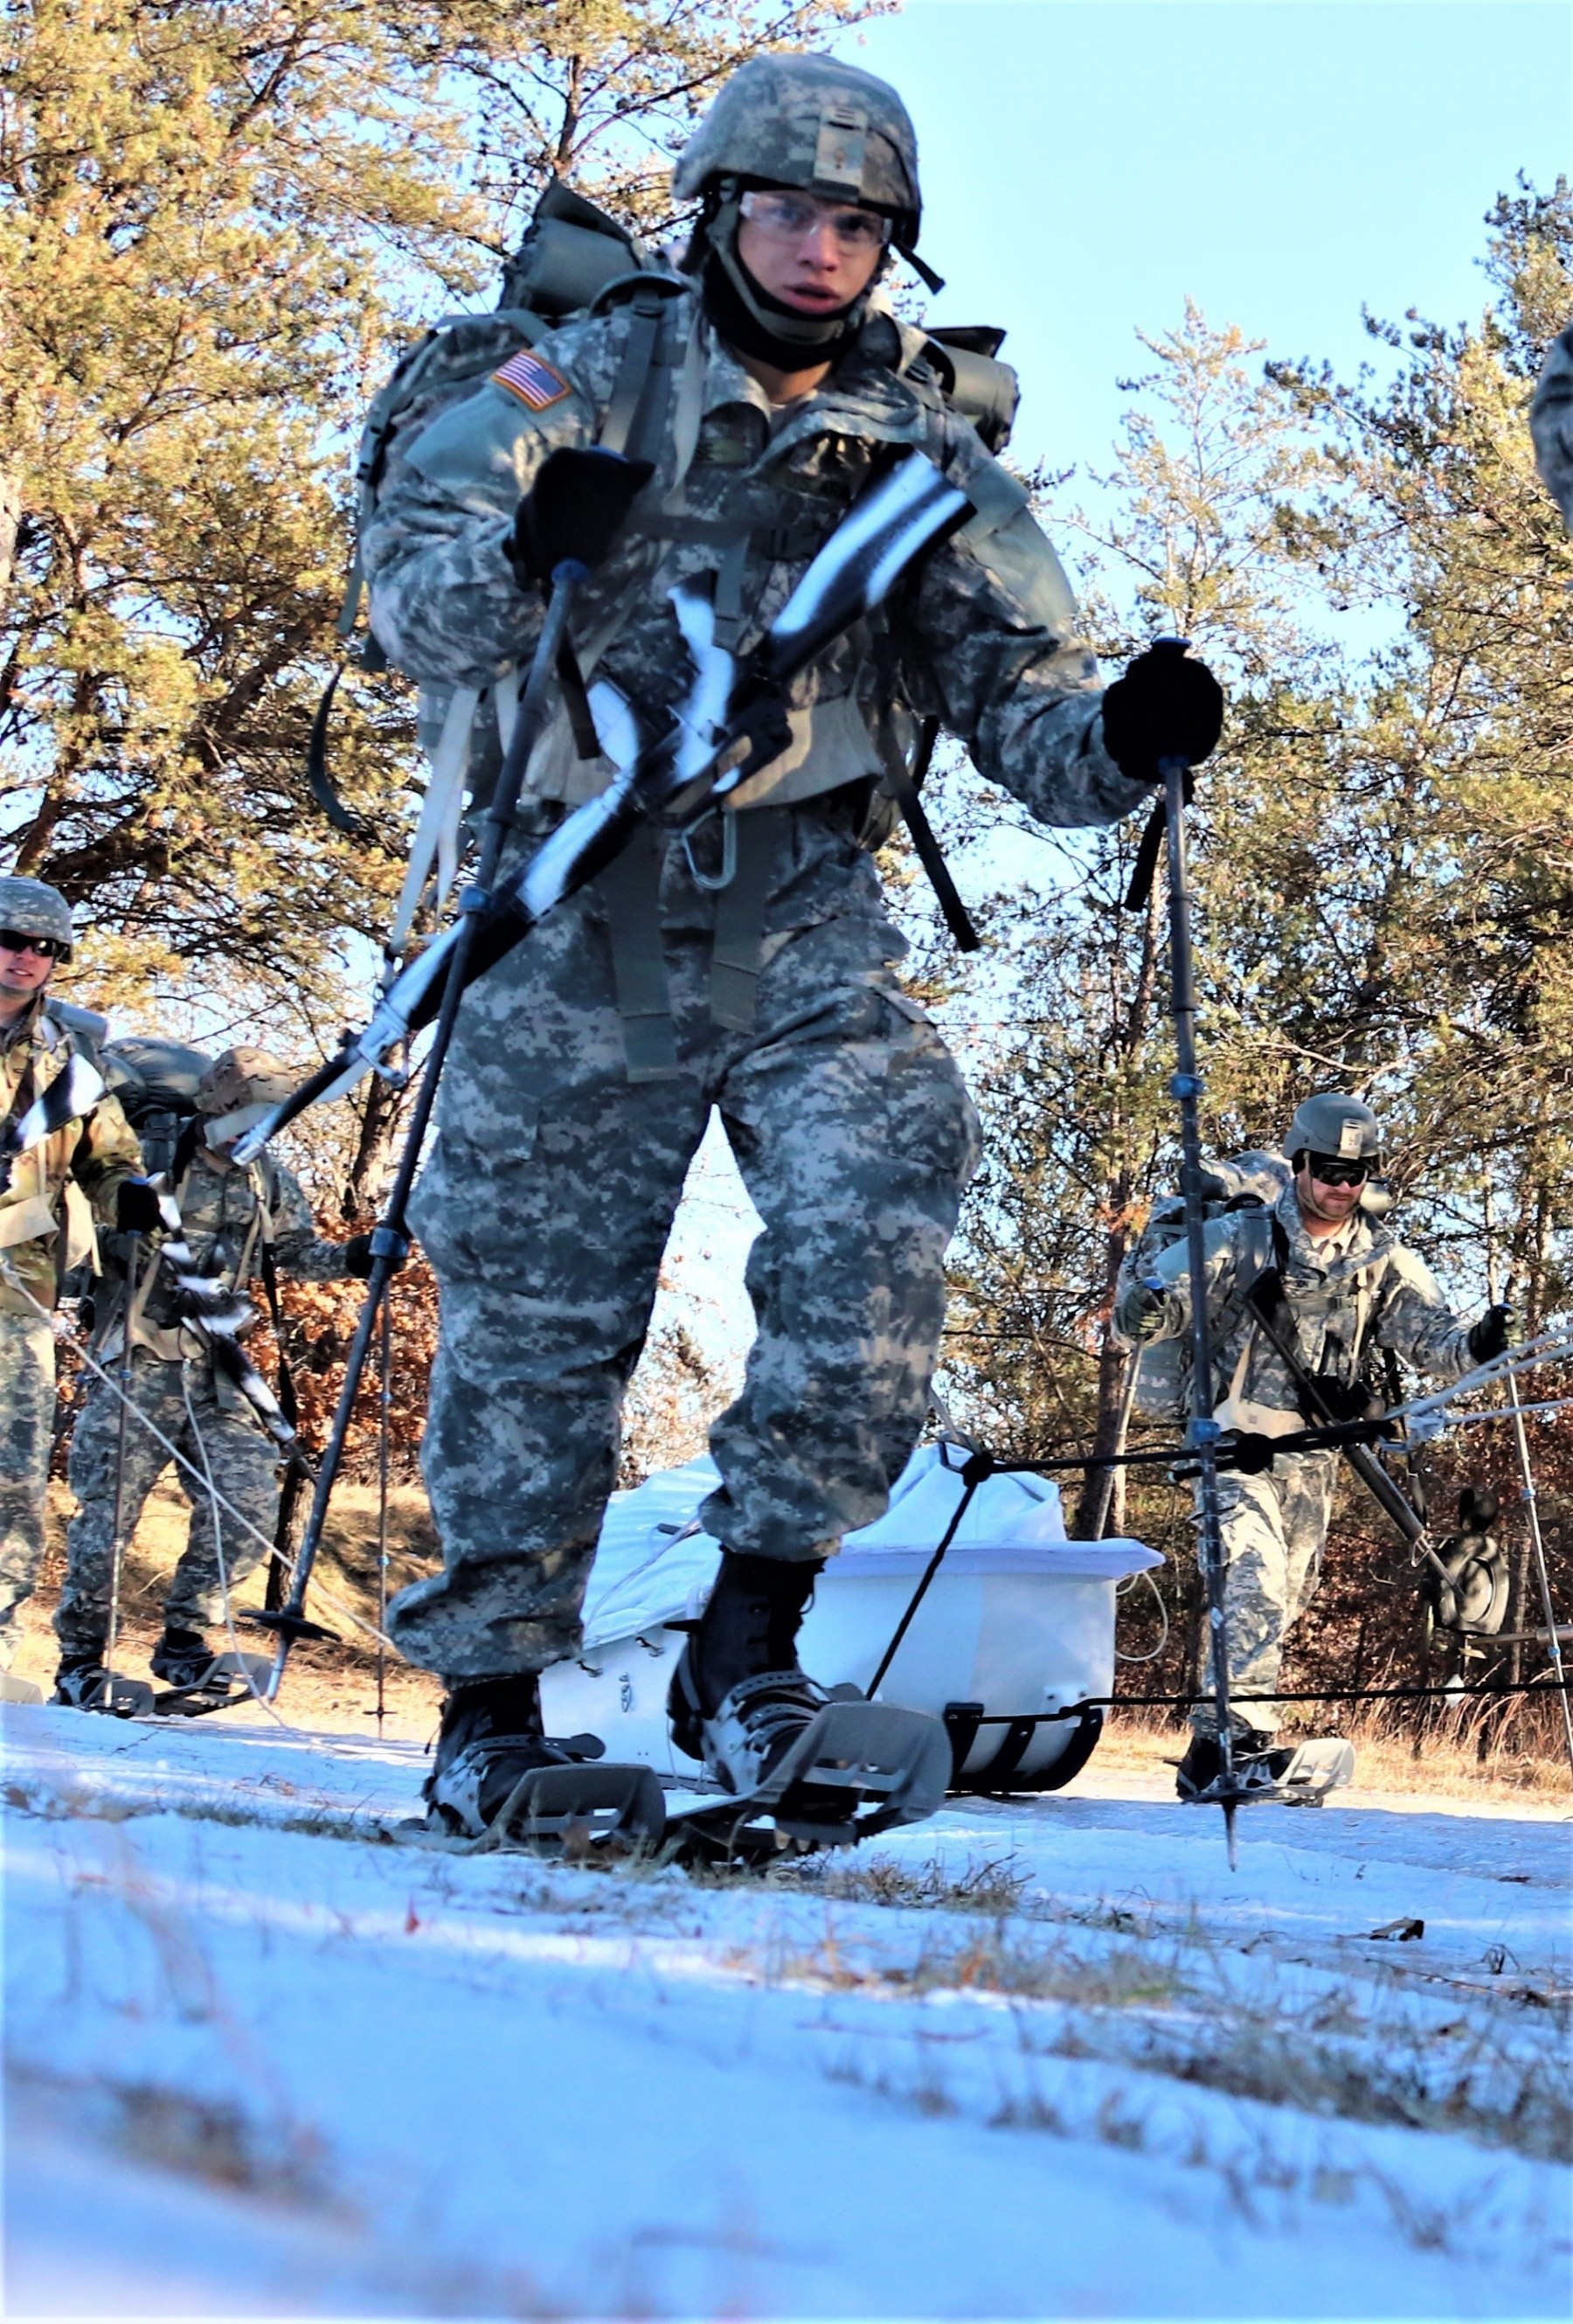 Photo Essay CWOC students complete snowshoe training, familiarization